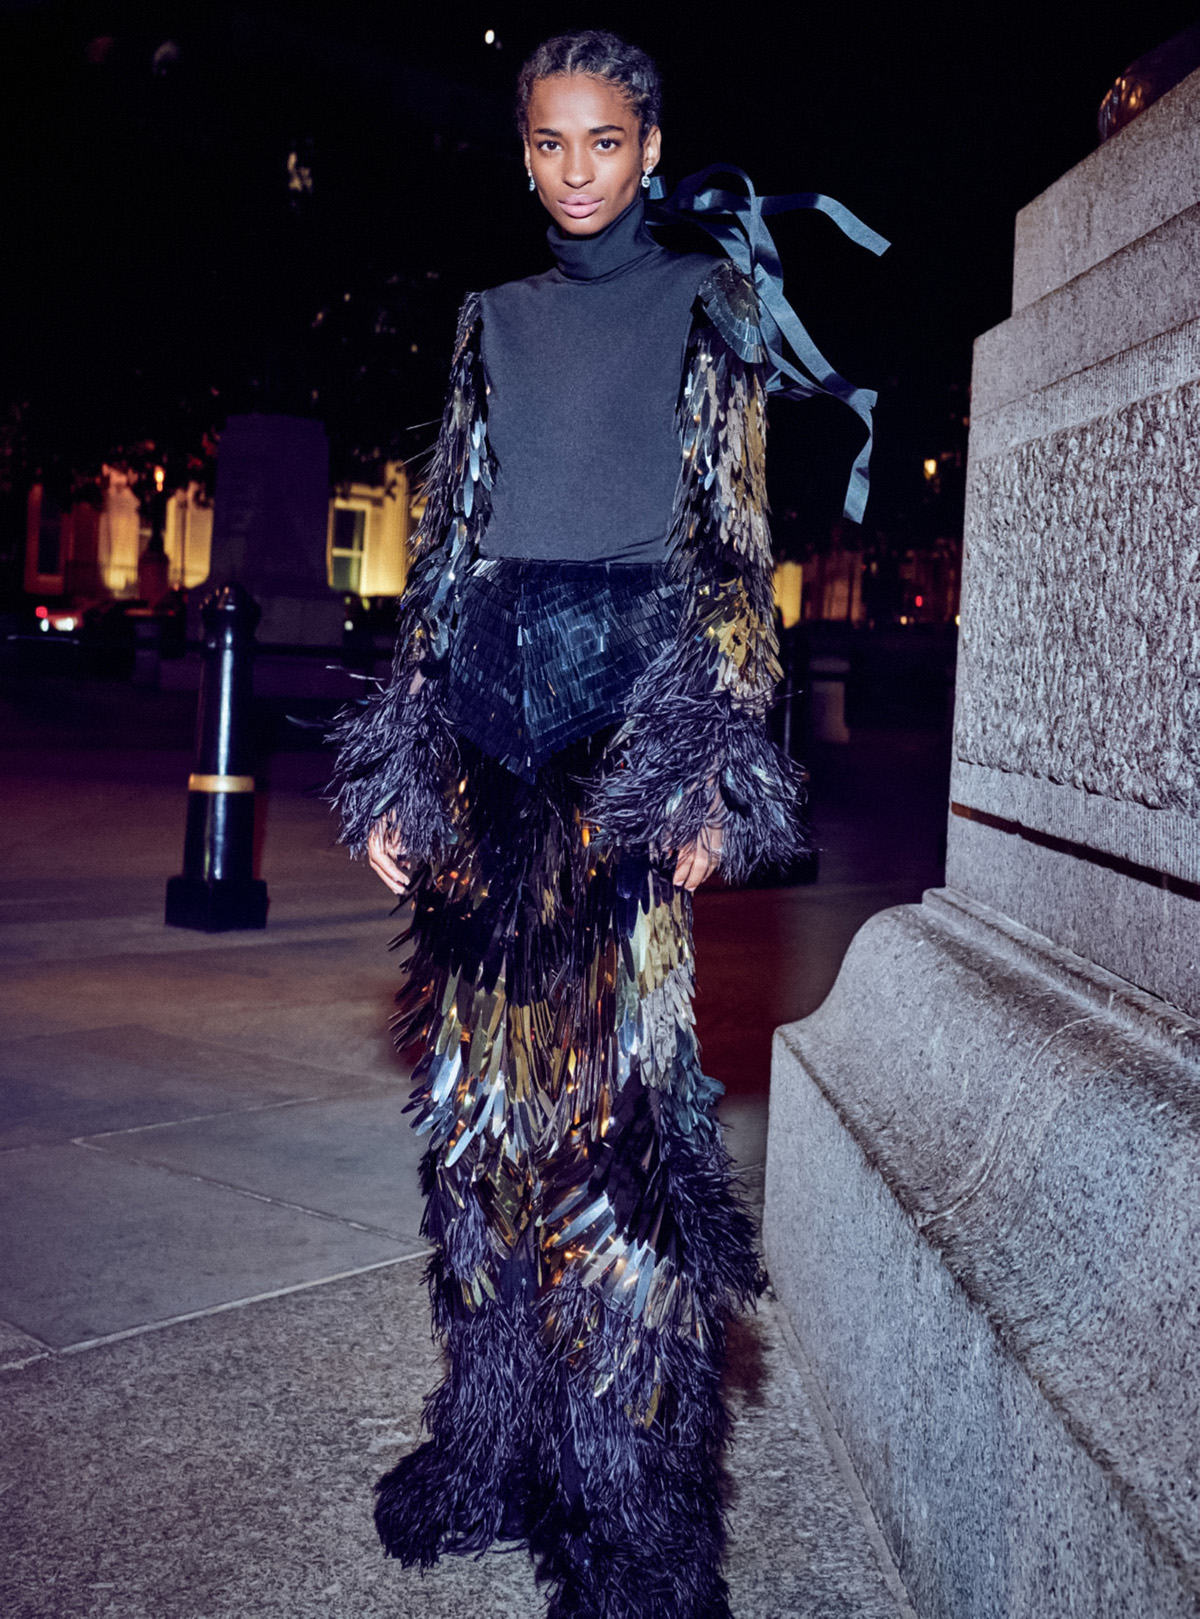 Ana Flavia by Jem Mitchell for Harper’s Bazaar UK November 2021